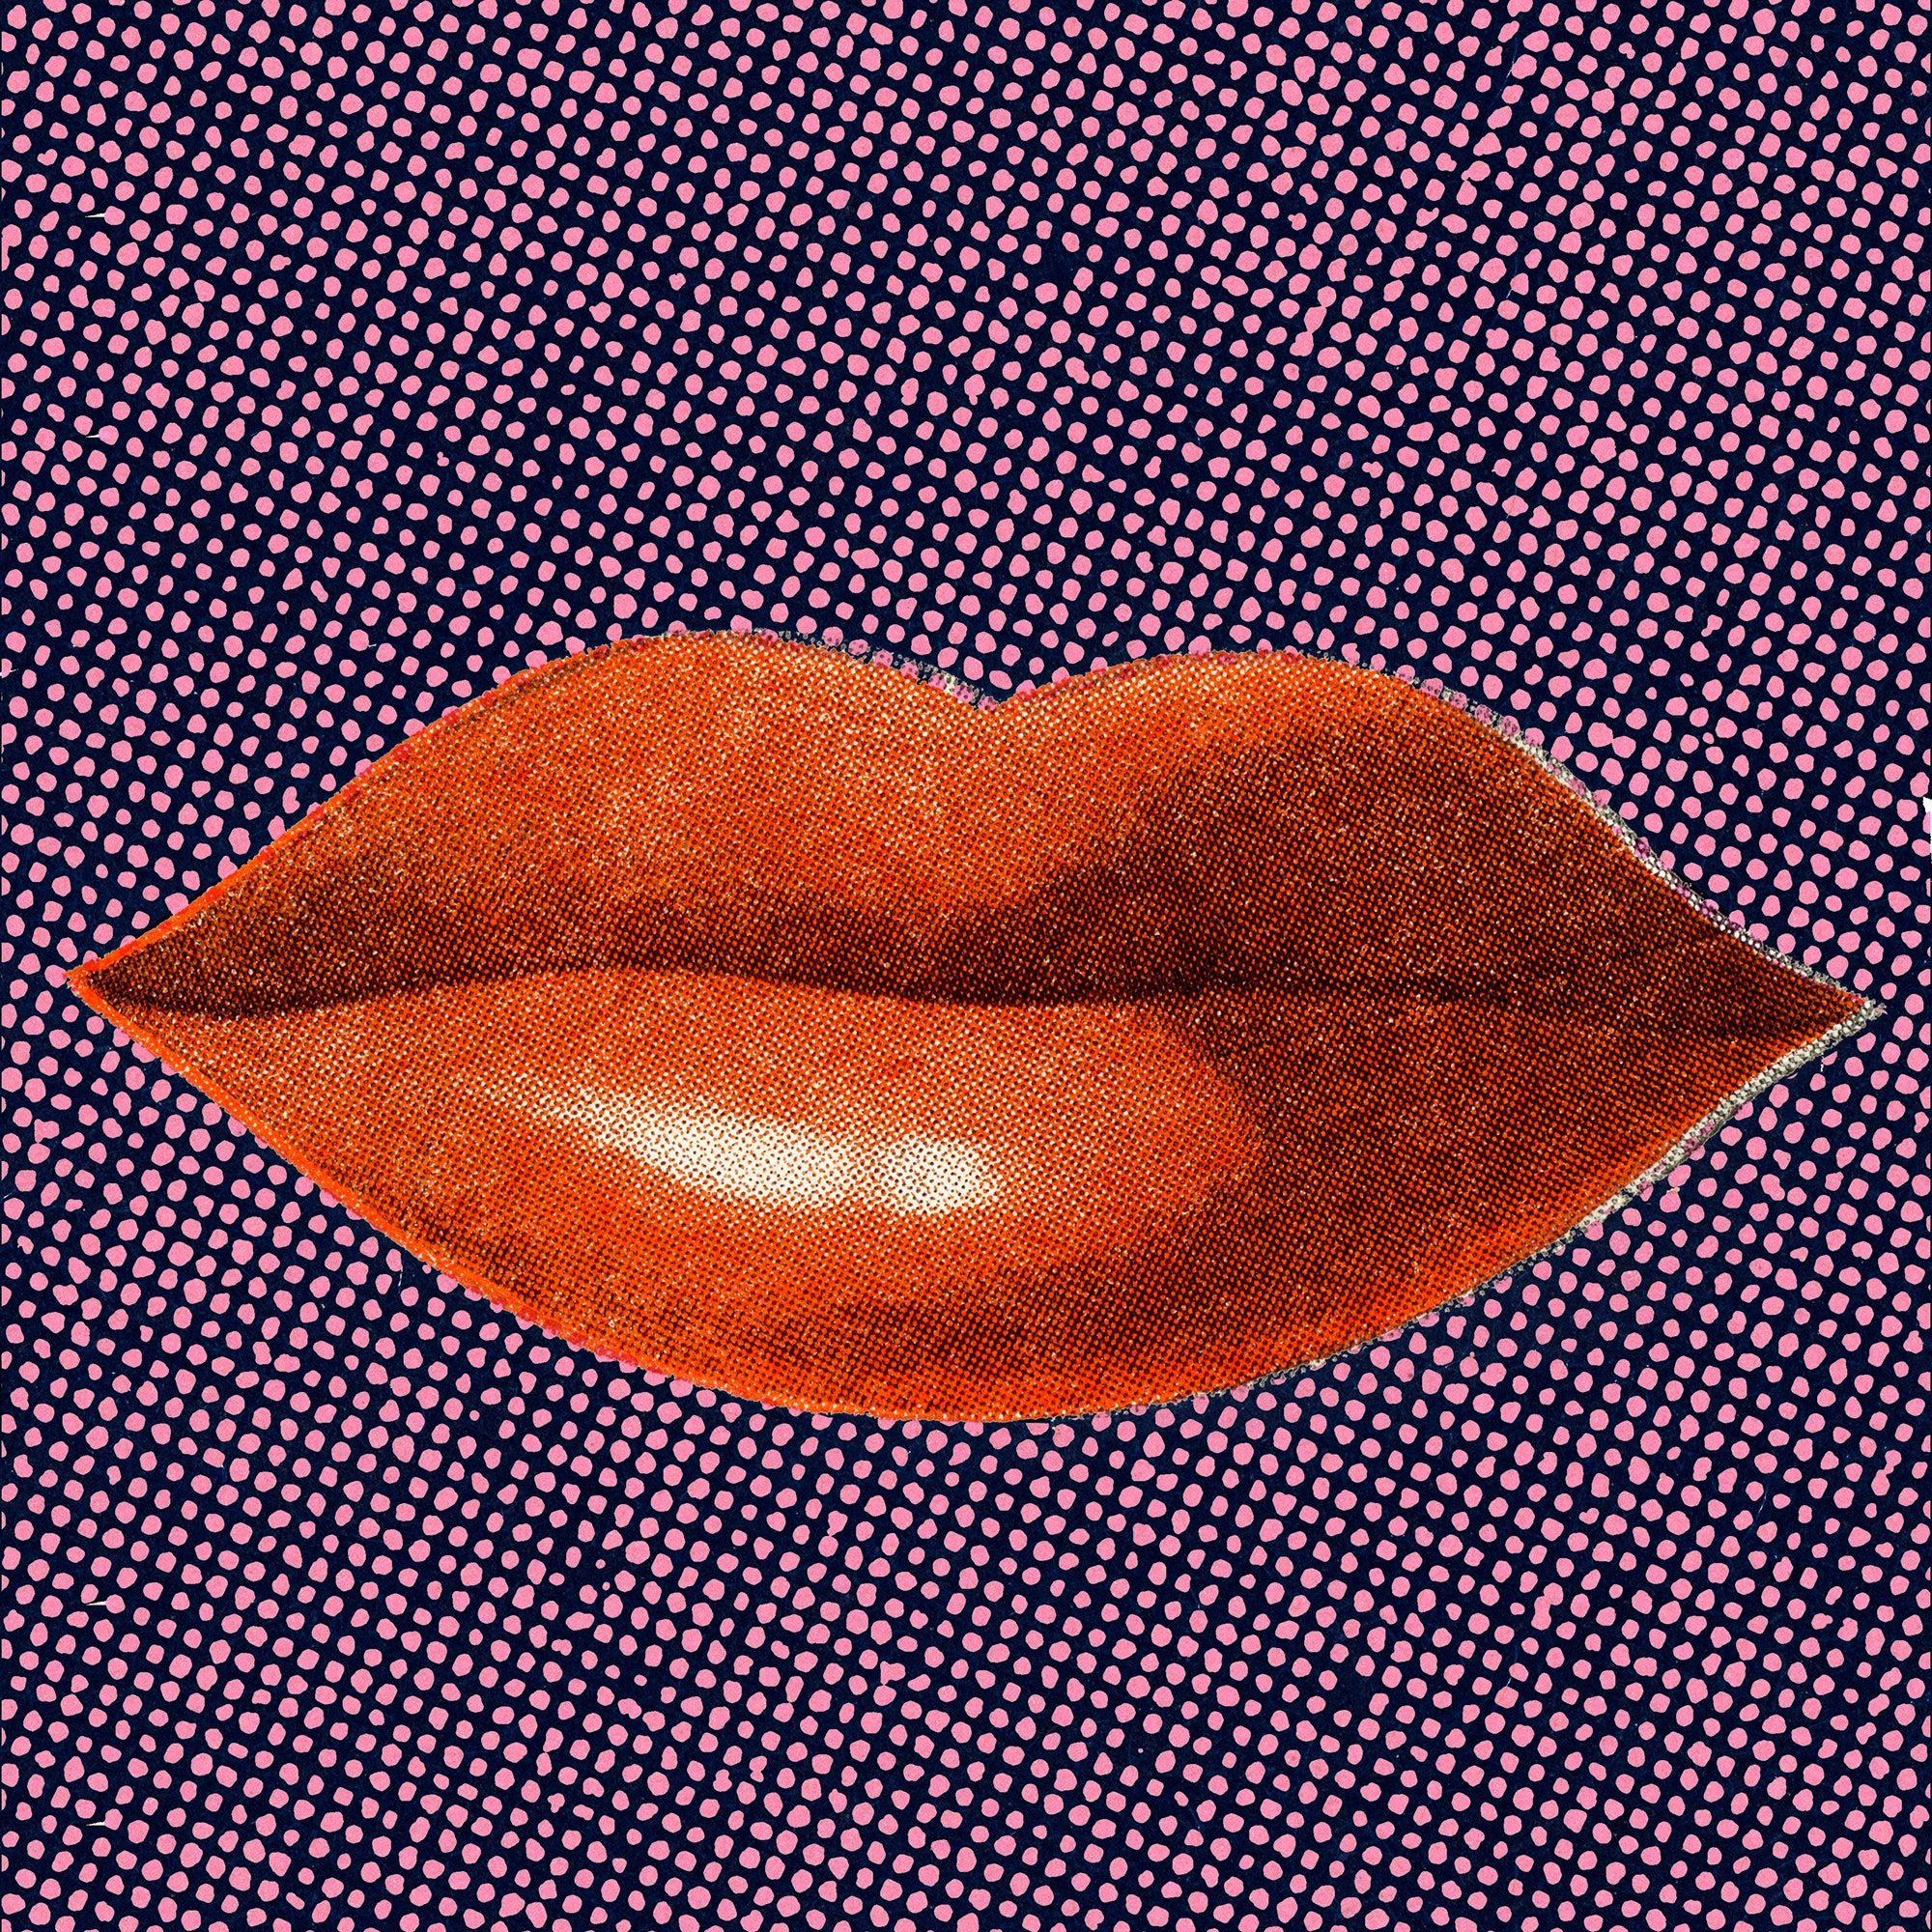 A close up of an orange lip on purple background - Lips